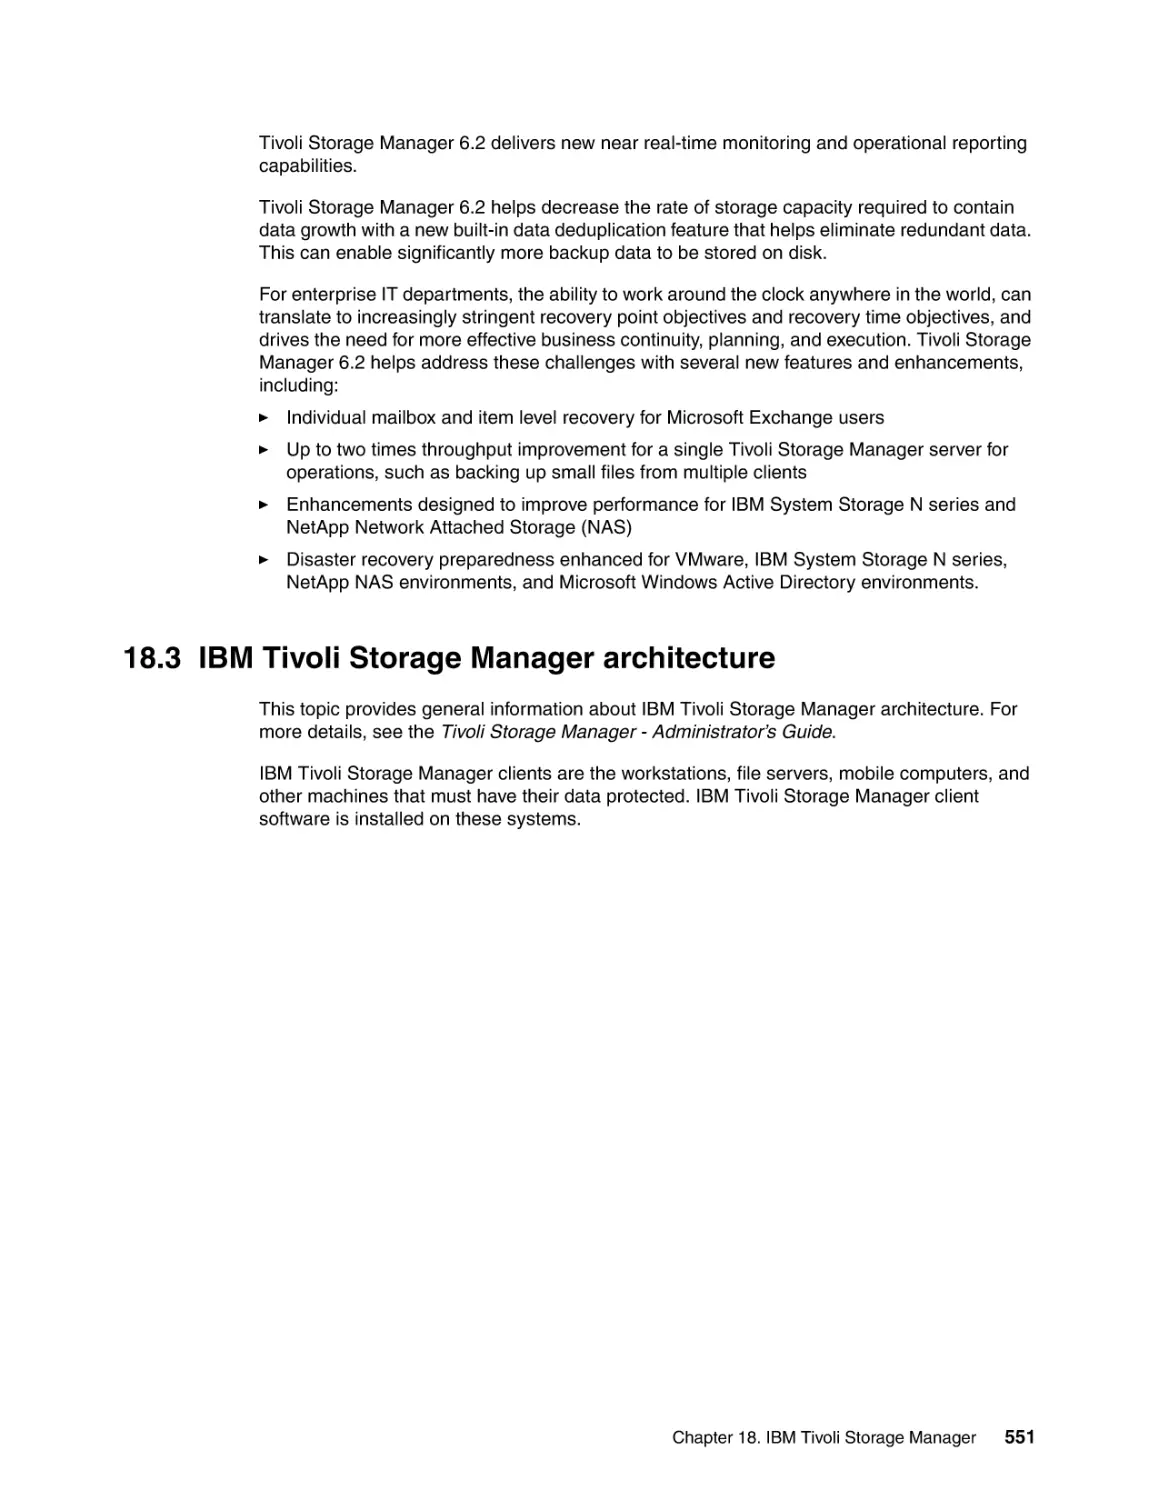 18.3 IBM Tivoli Storage Manager architecture